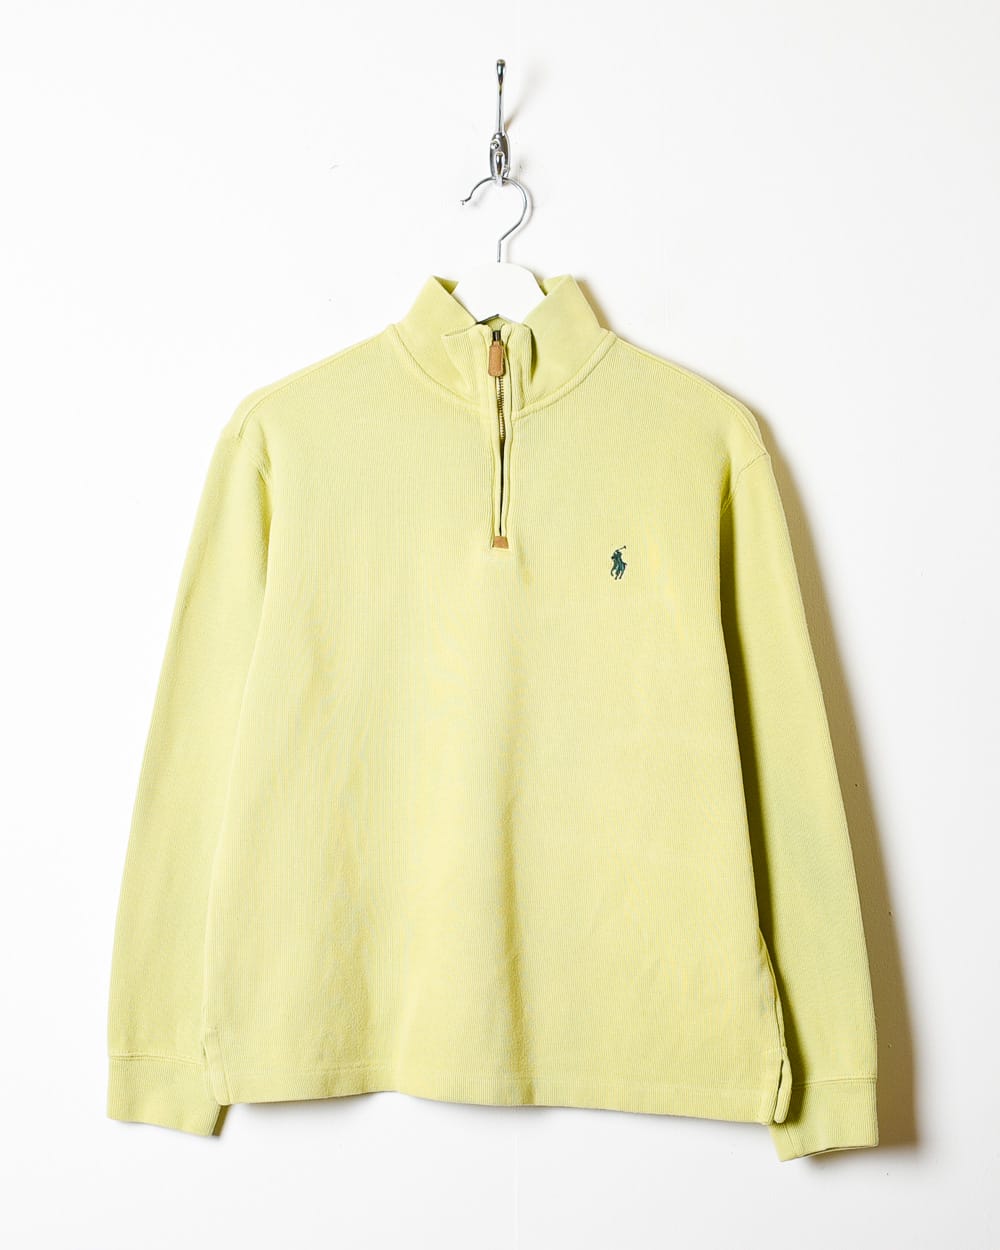 Yellow Polo Ralph Lauren 1/4 Zip Sweatshirt - X-Small